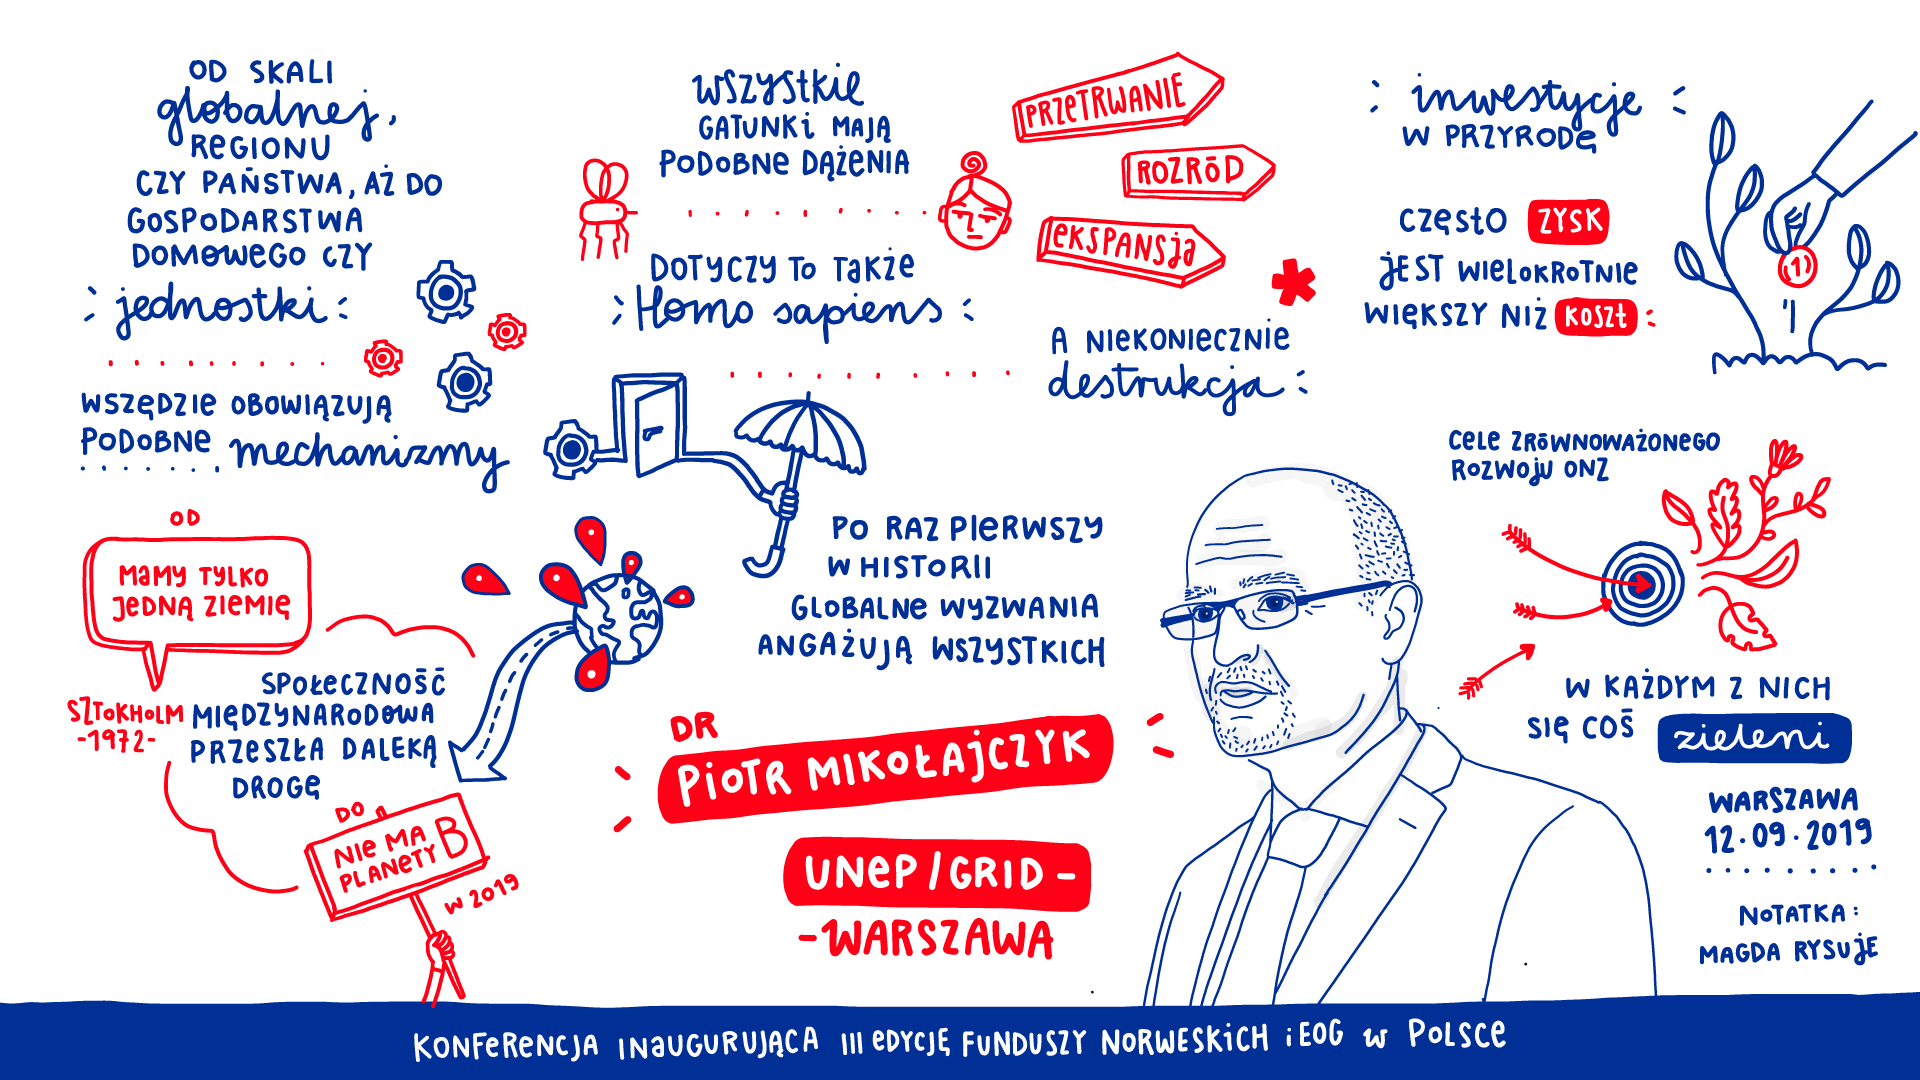 Graphic description of the speech - Dr. Piotr Mikołajczyk, UNEP/GRID-Warsaw